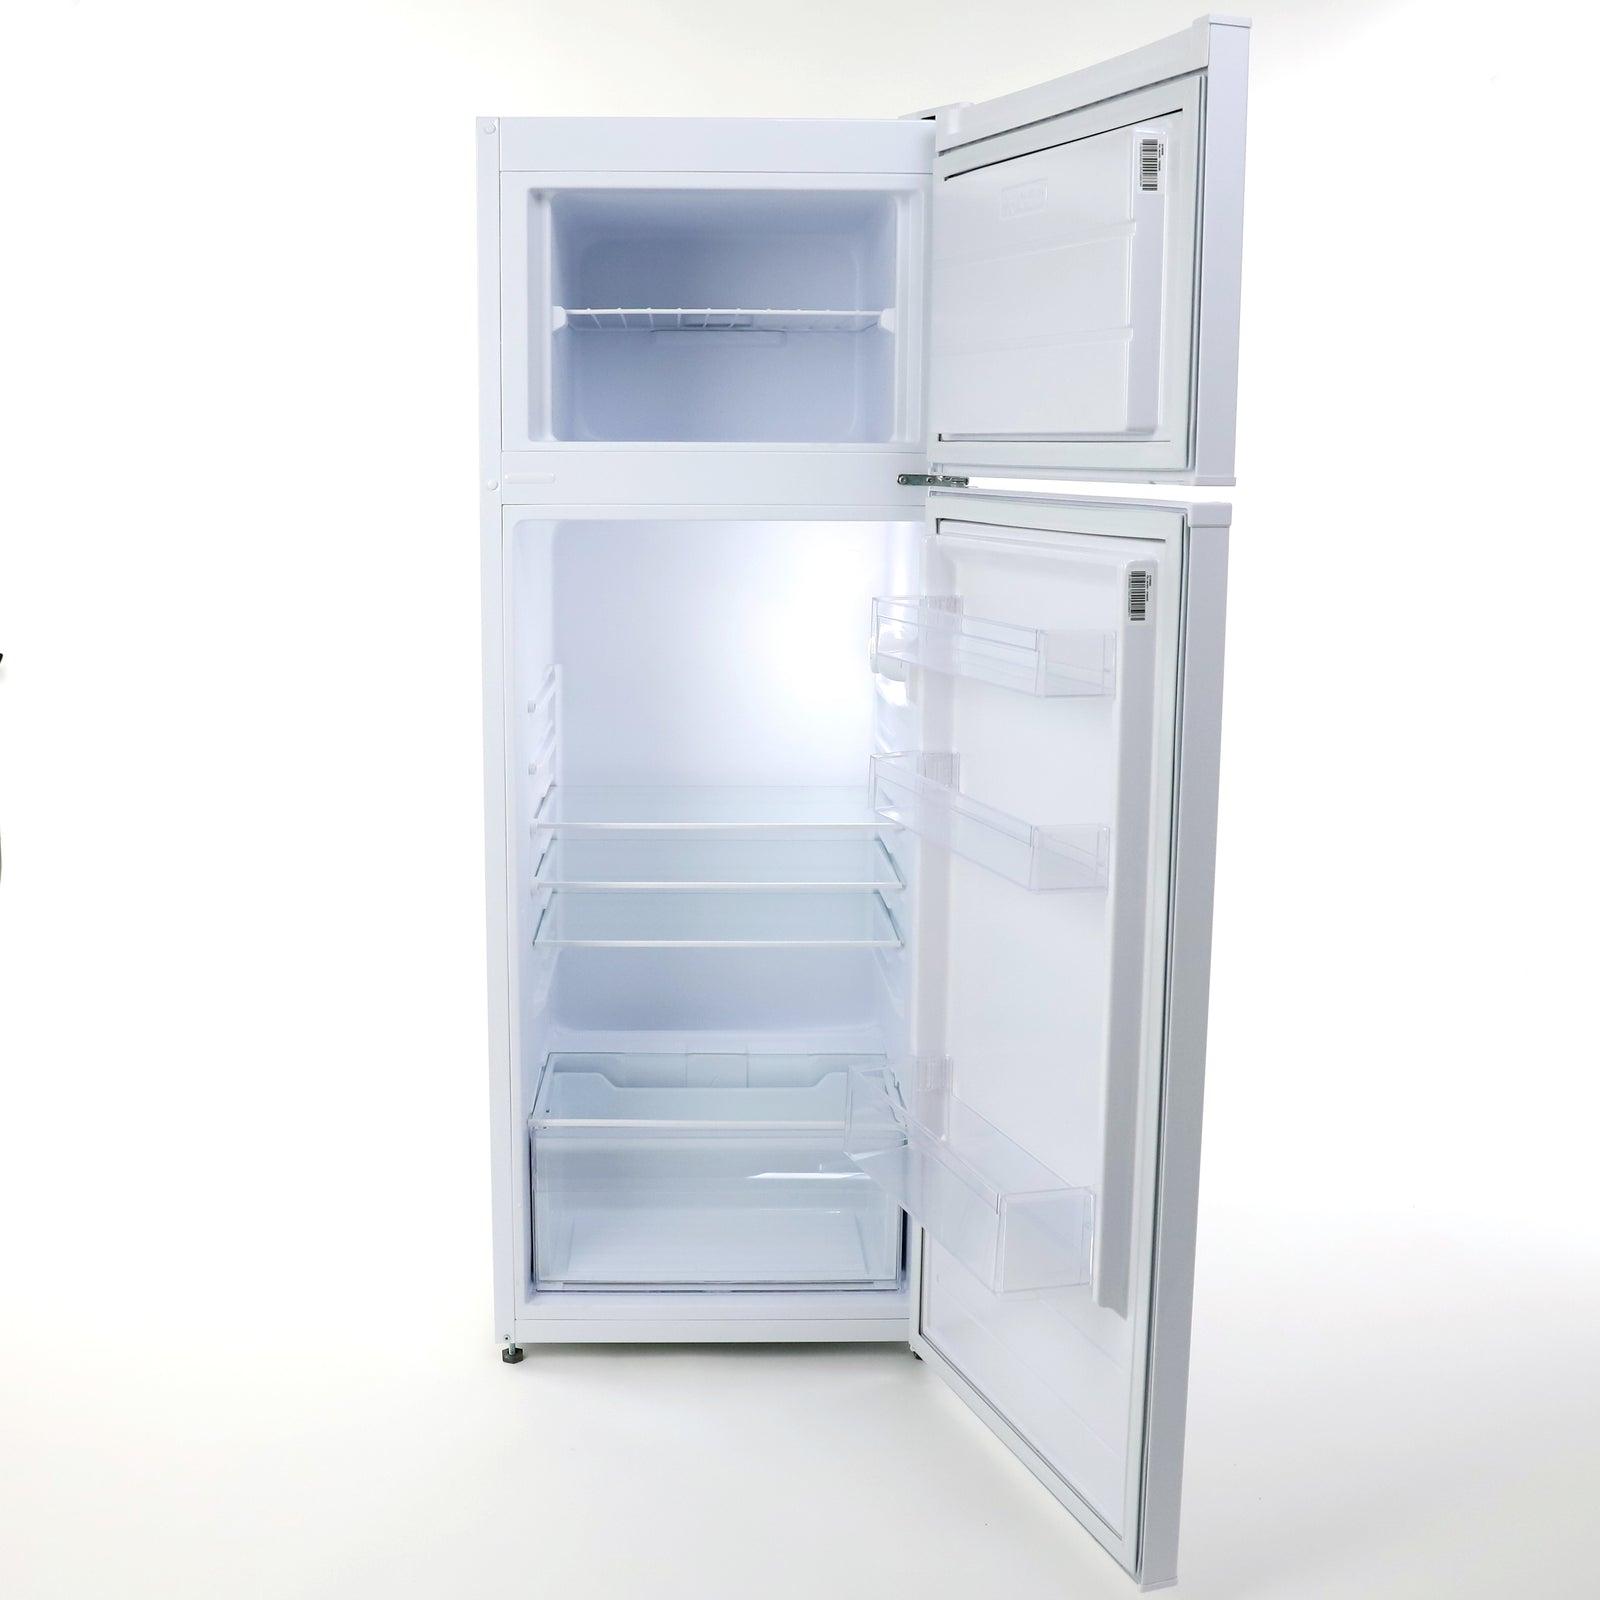 AVANTI RA75V3S 7.4 cu. ft. Apartment Size Refrigerator